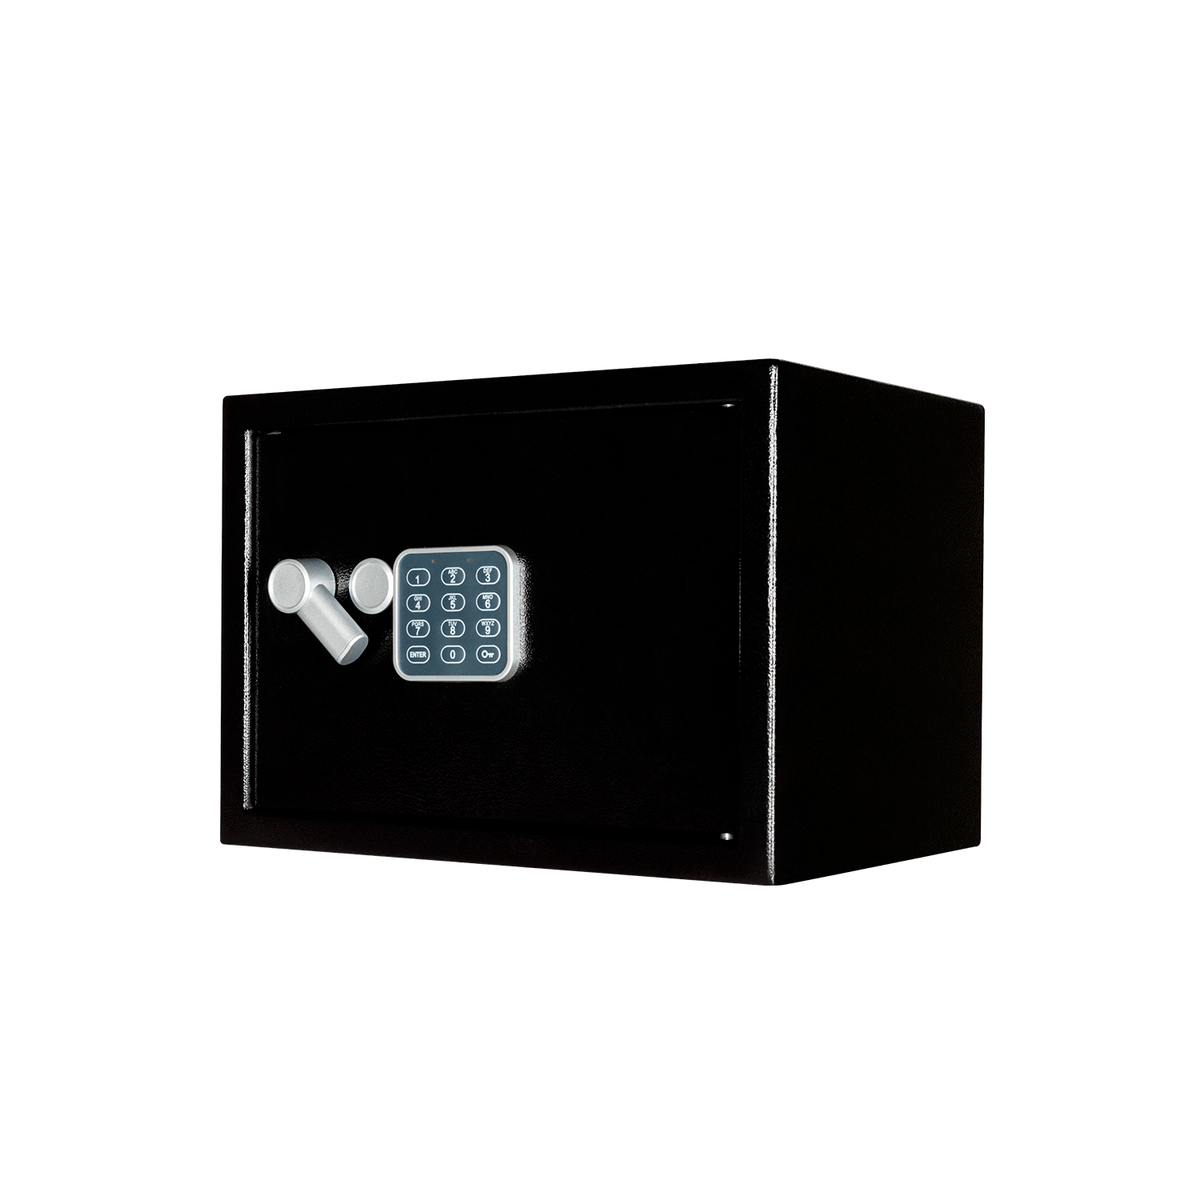  SereneLife - Caja de seguridad, caja fuerte, caja de